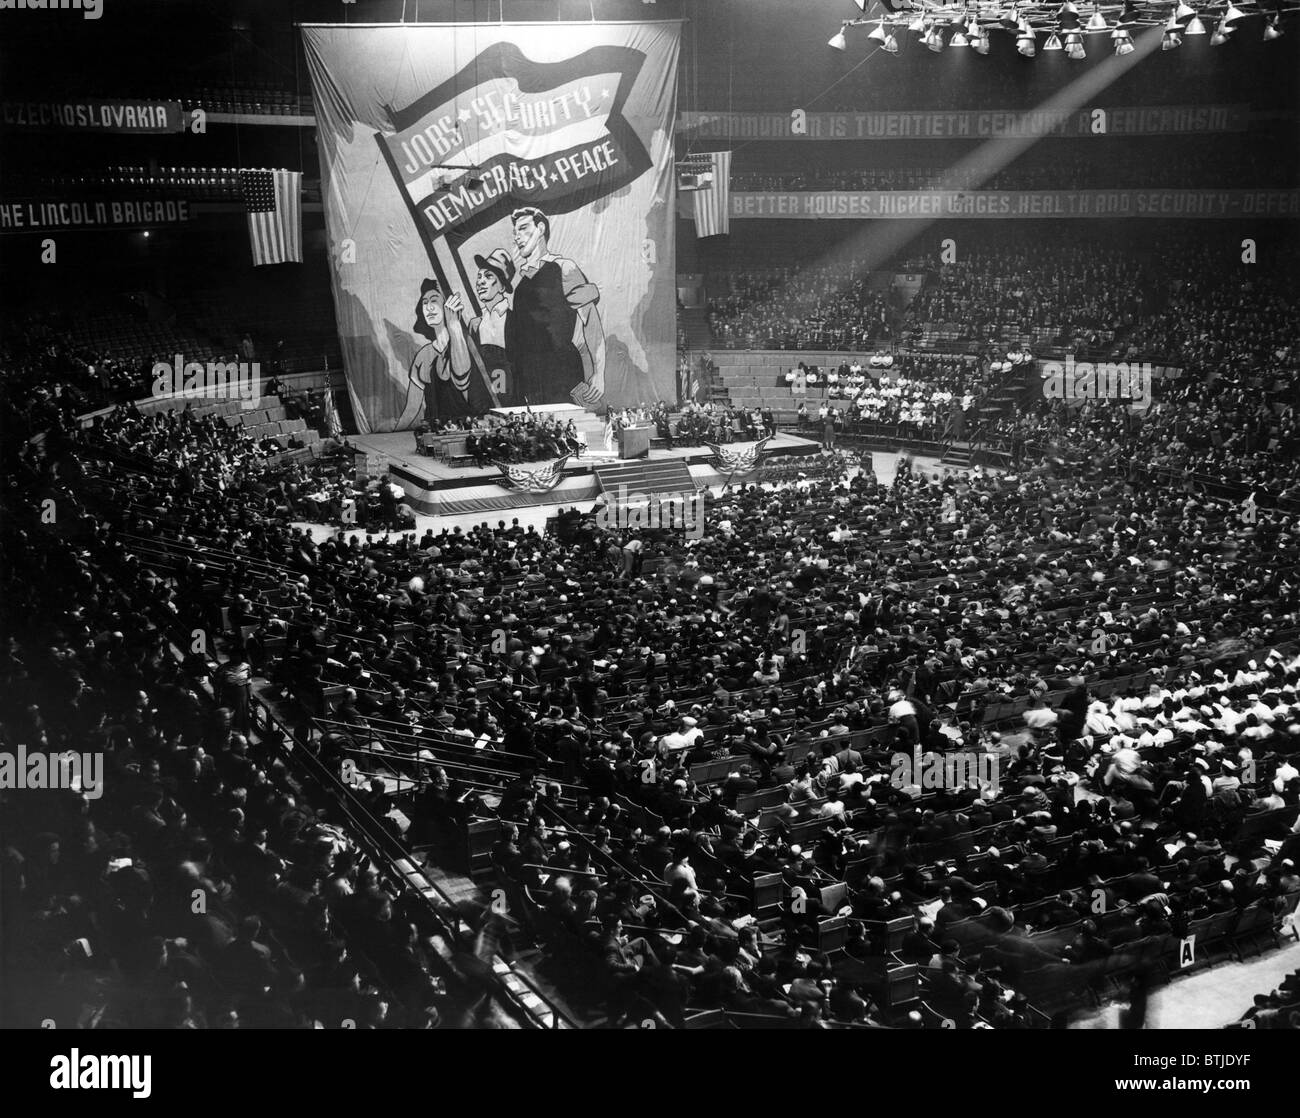 communist-rally-in-chicago-1938-courtesy-csu-archiveseverett-collection-BTJDYF.jpg